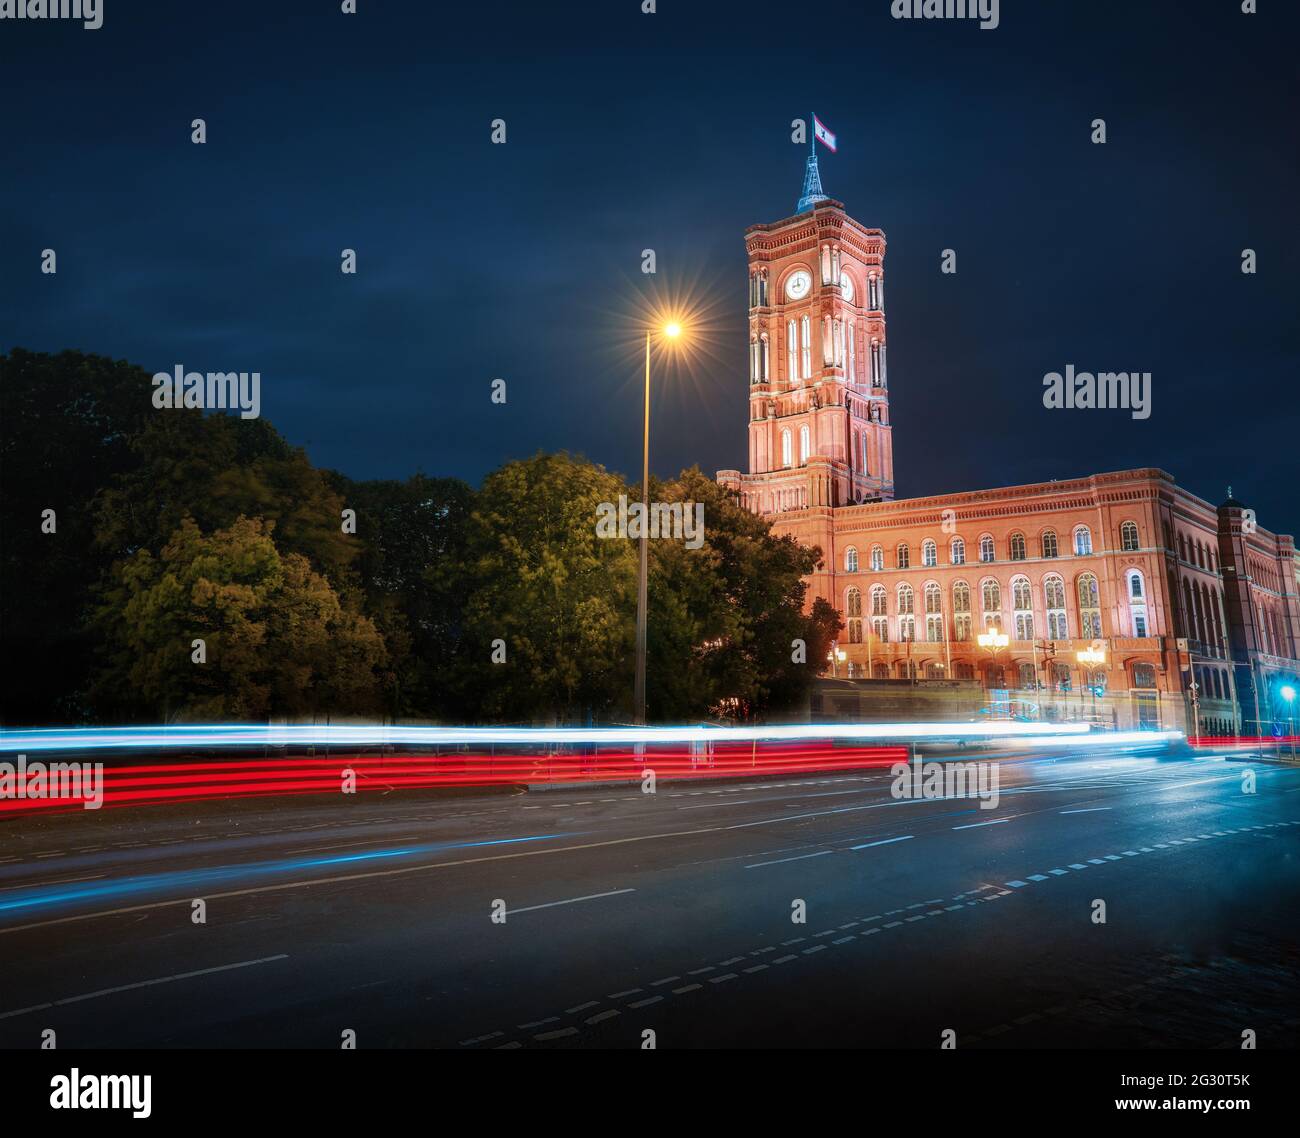 Berlin Town Hall (Rotes Rathaus) at night - Berlin, Germany Stock Photo